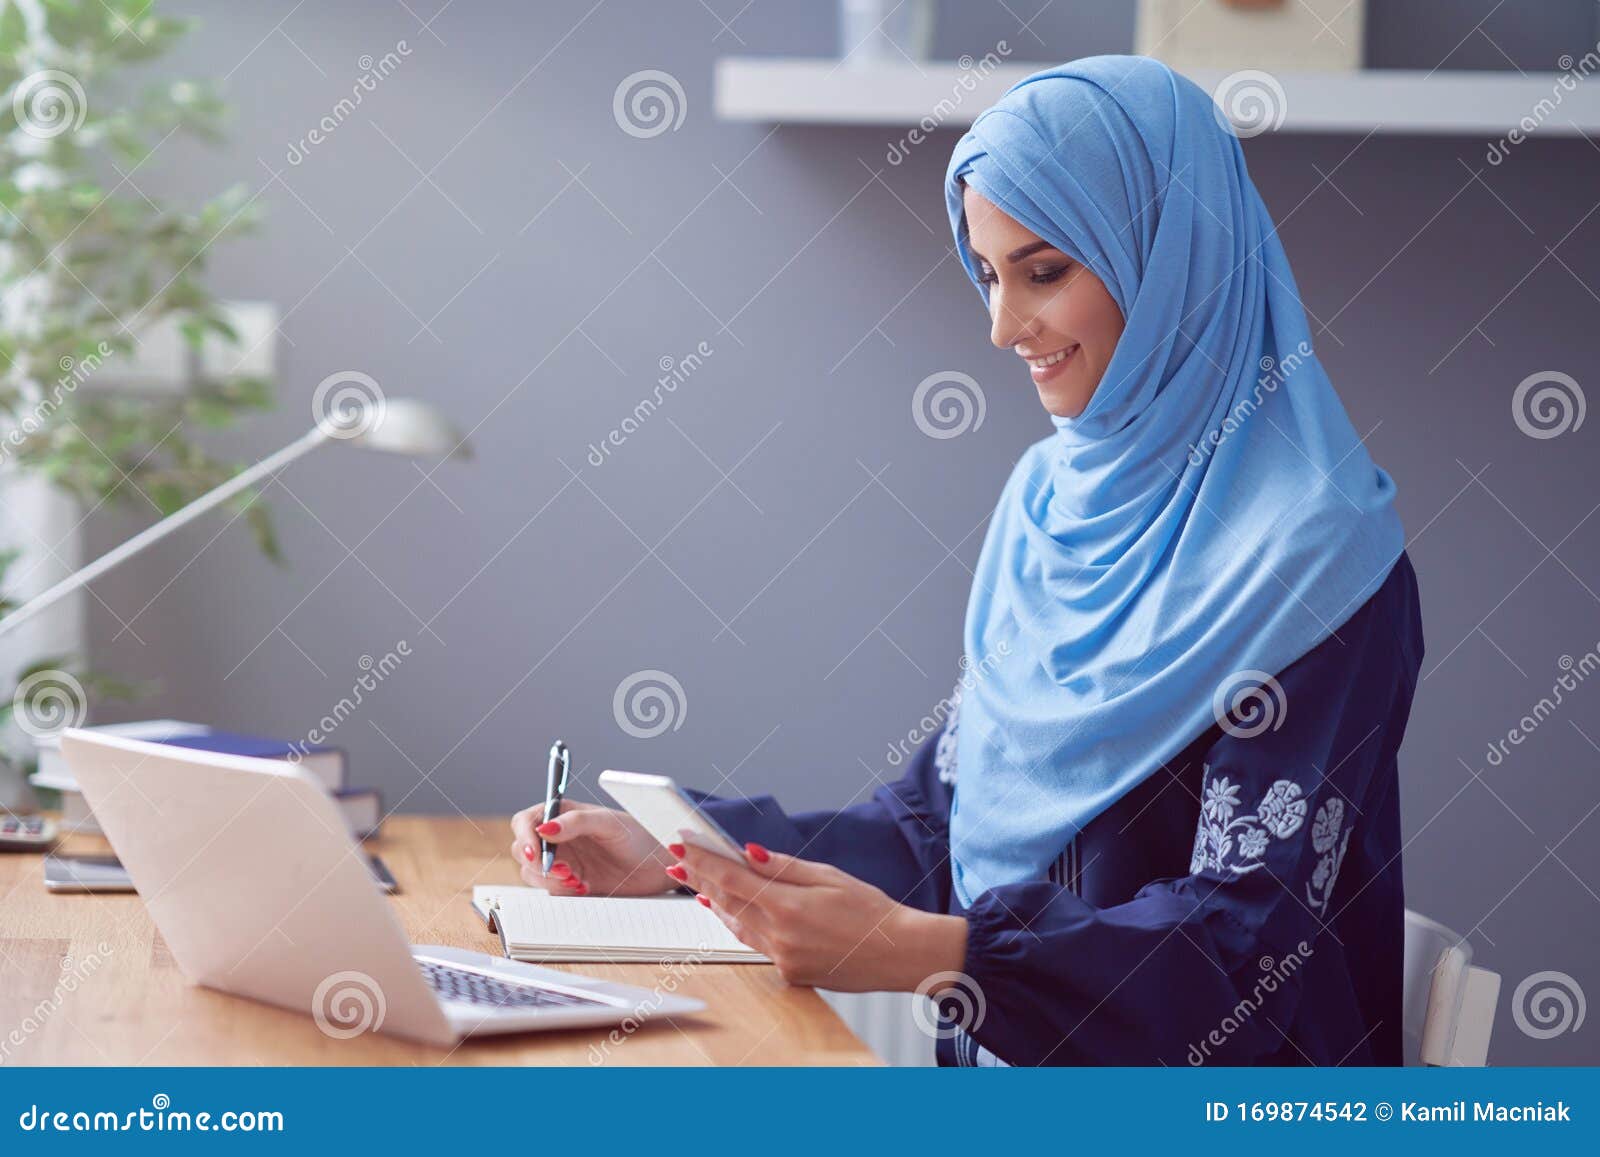 Muslim Adult Woman Using Smartphone Stock Photo - Image of phone ...